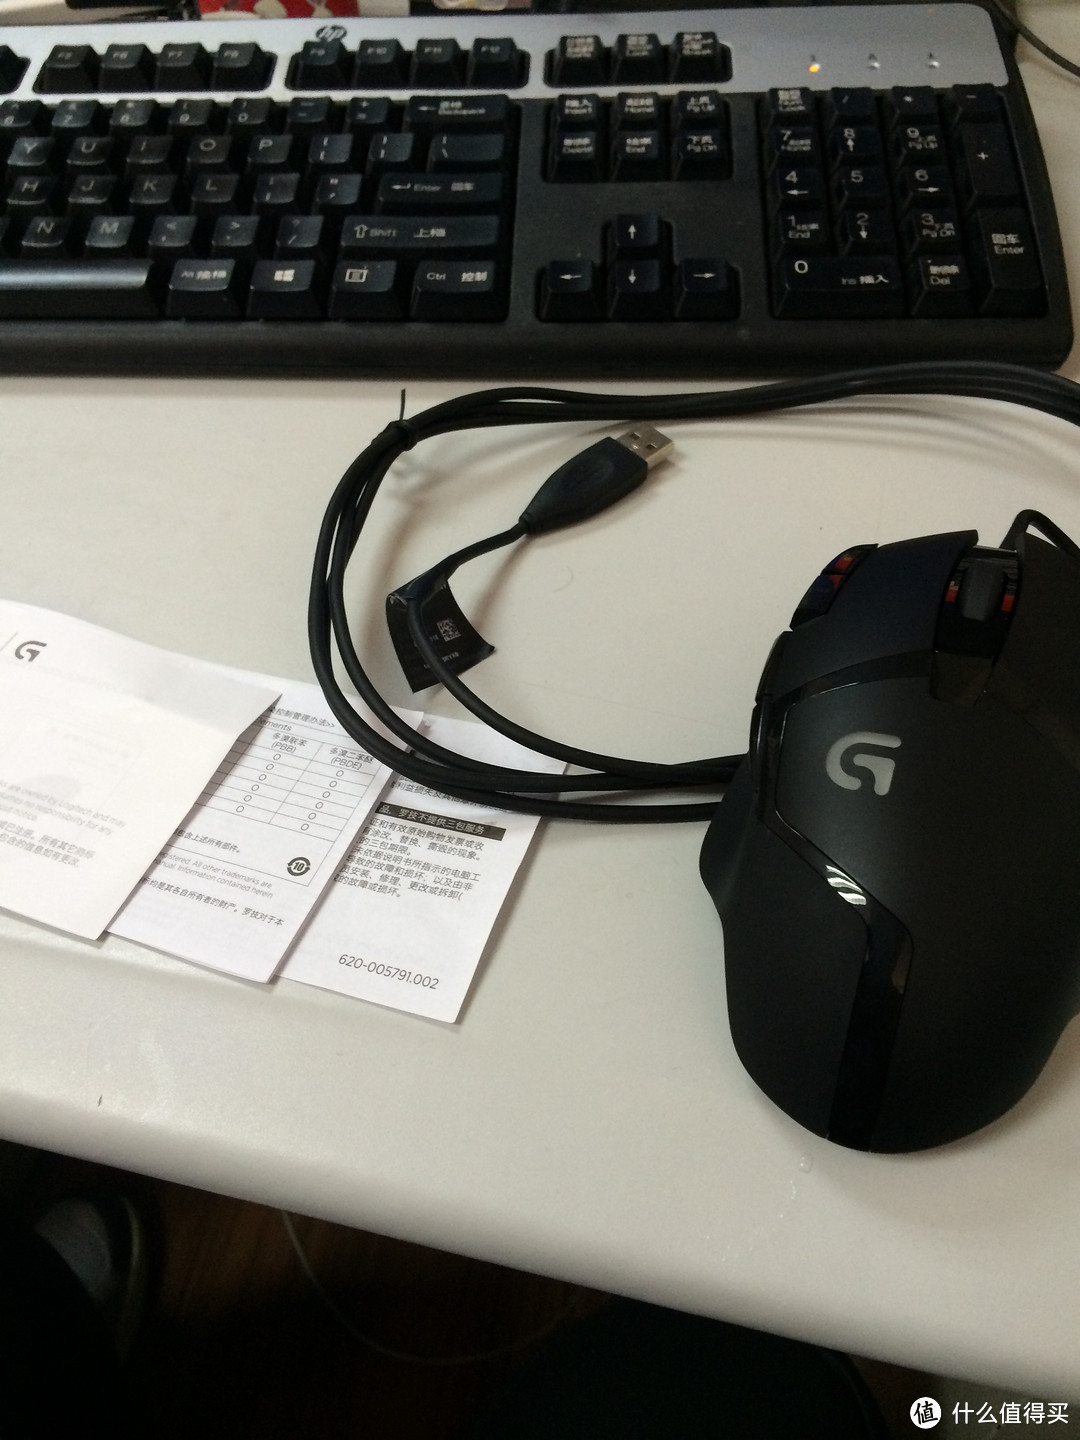 Logitech 罗技 G402 高速追踪游戏鼠标